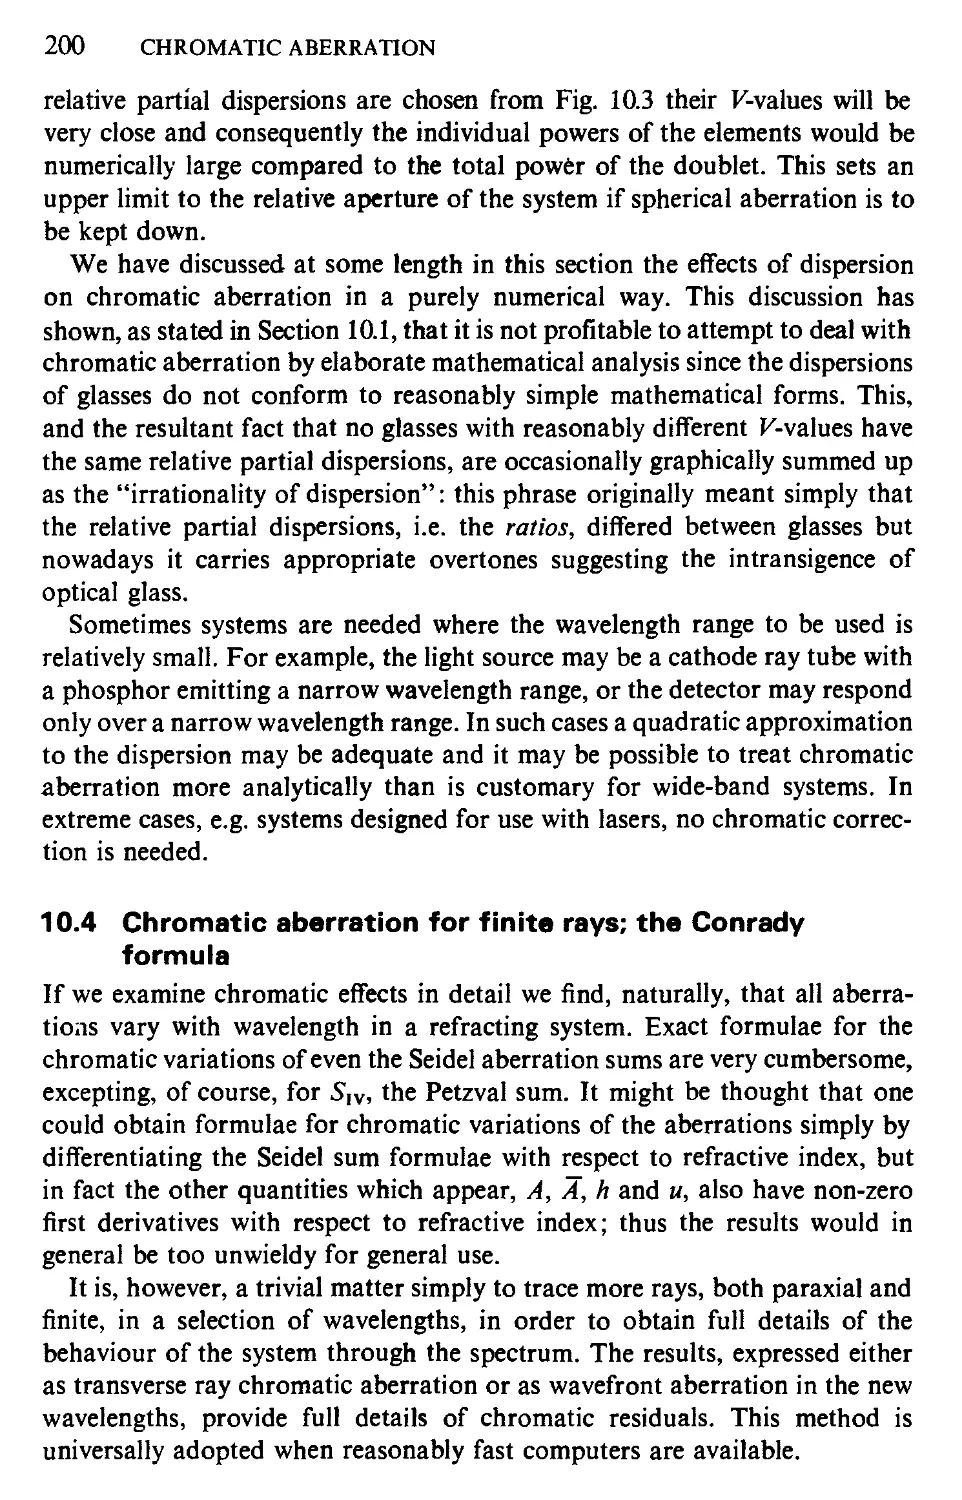 10.4 Chromatic aberration for finite rays; the Conrady formula